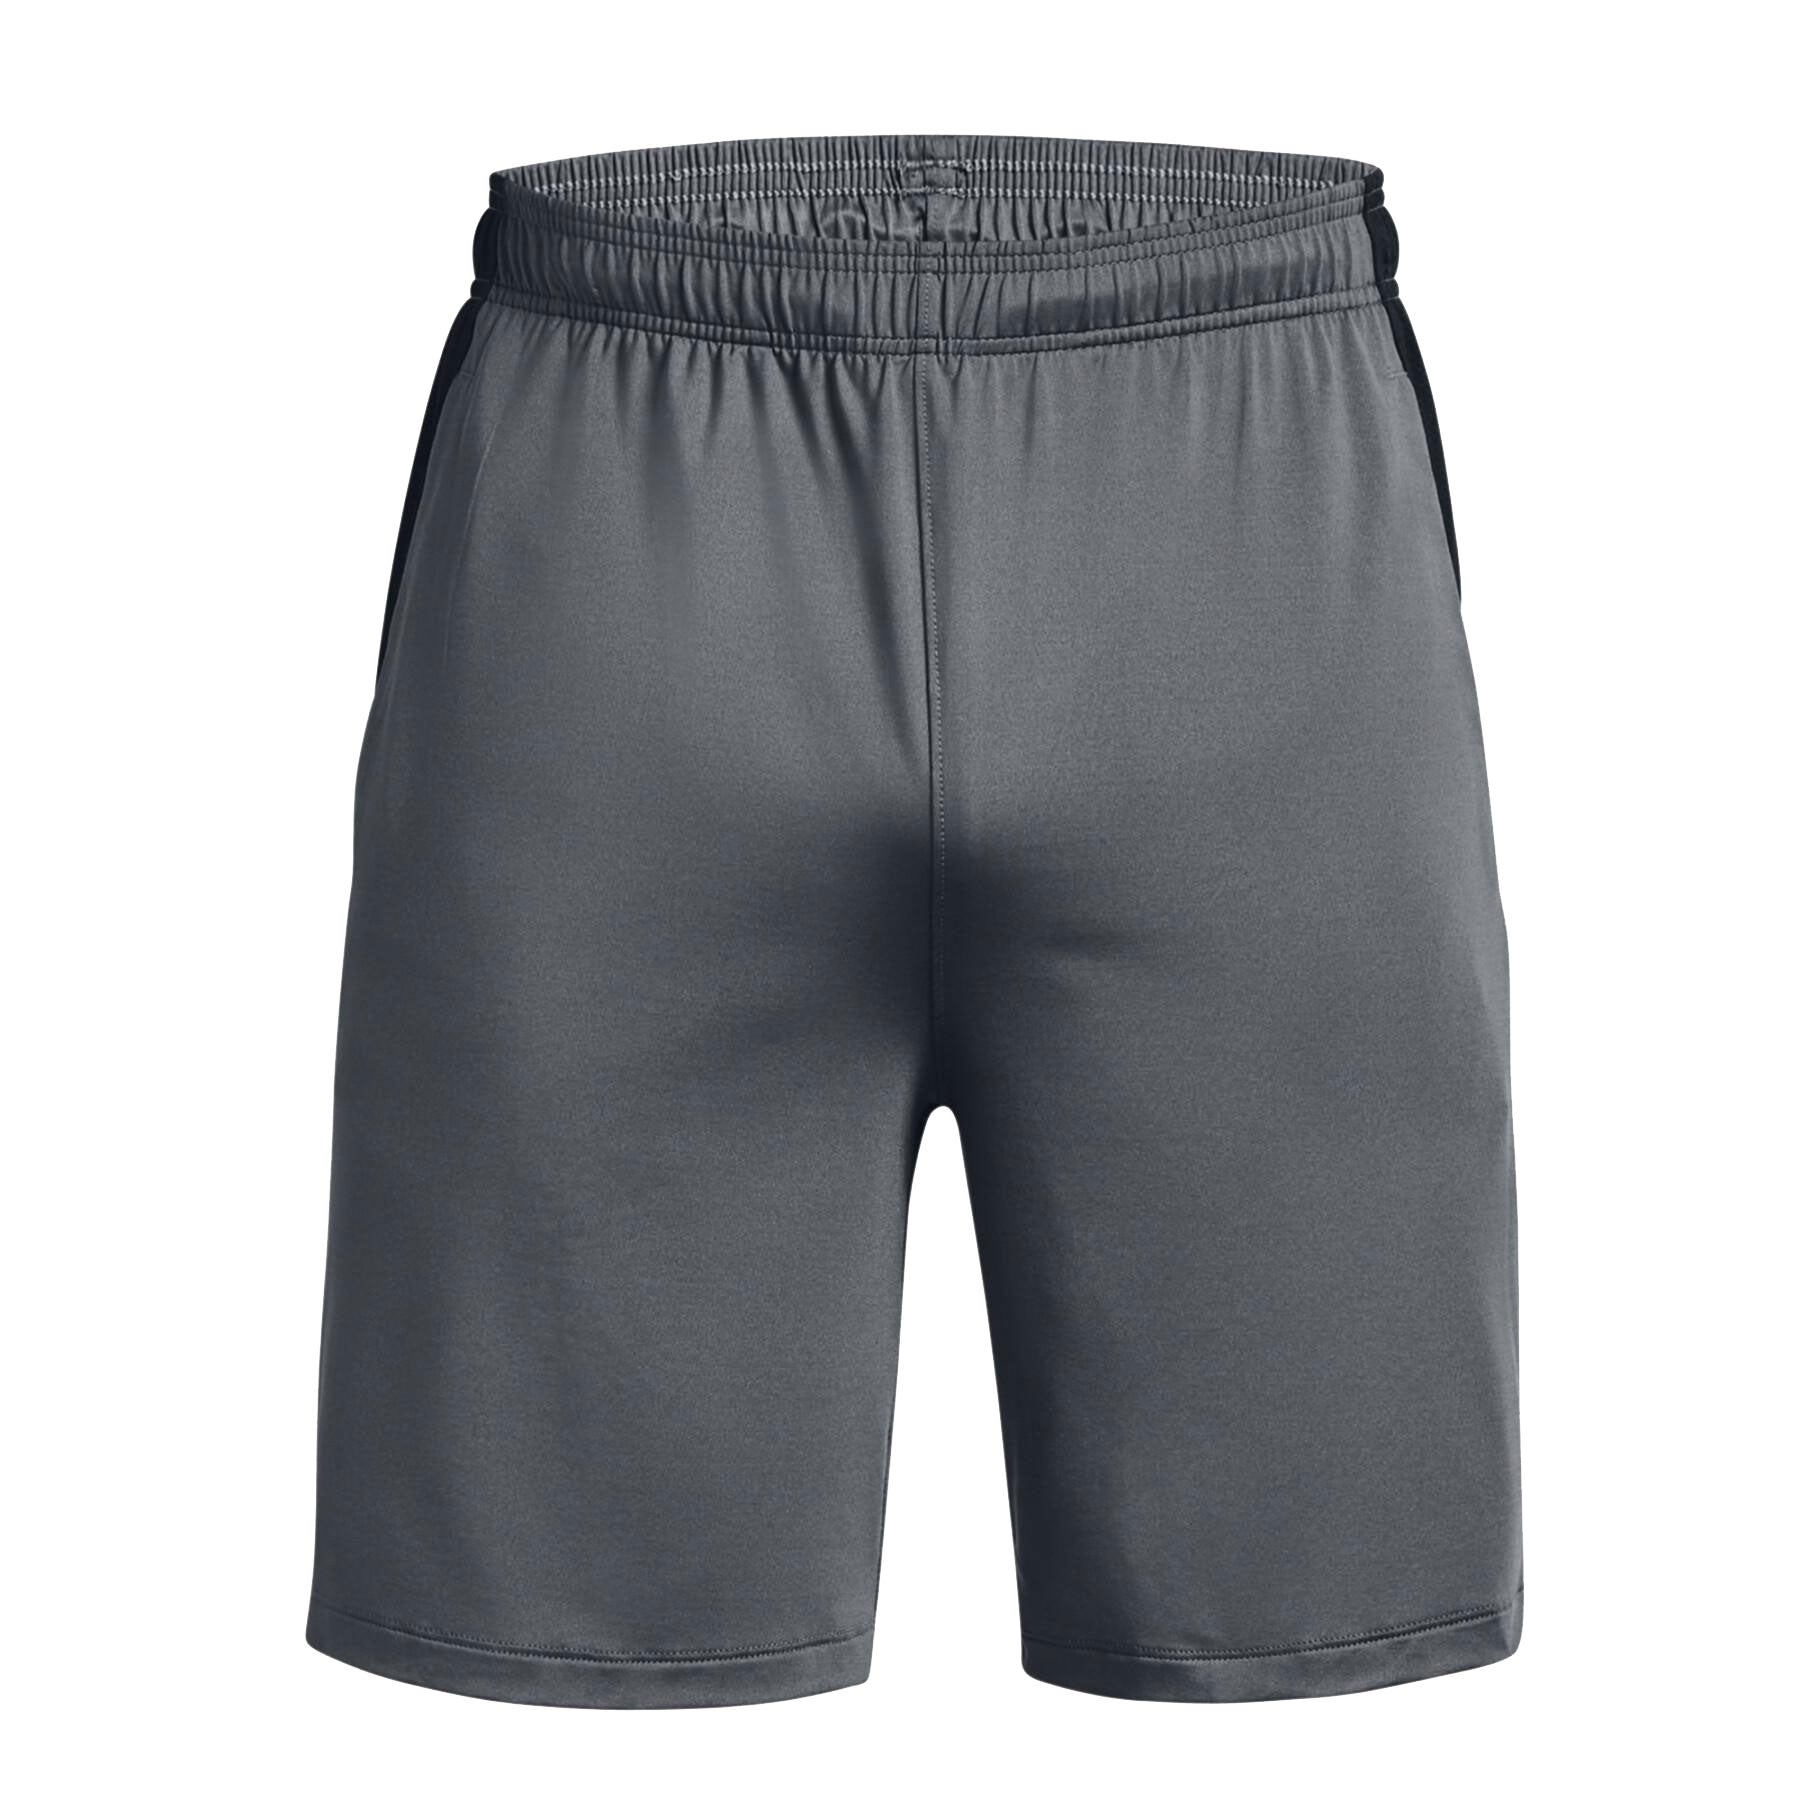 Under Armour Tech Vent Shorts - Mens - Pitch Grey/Black